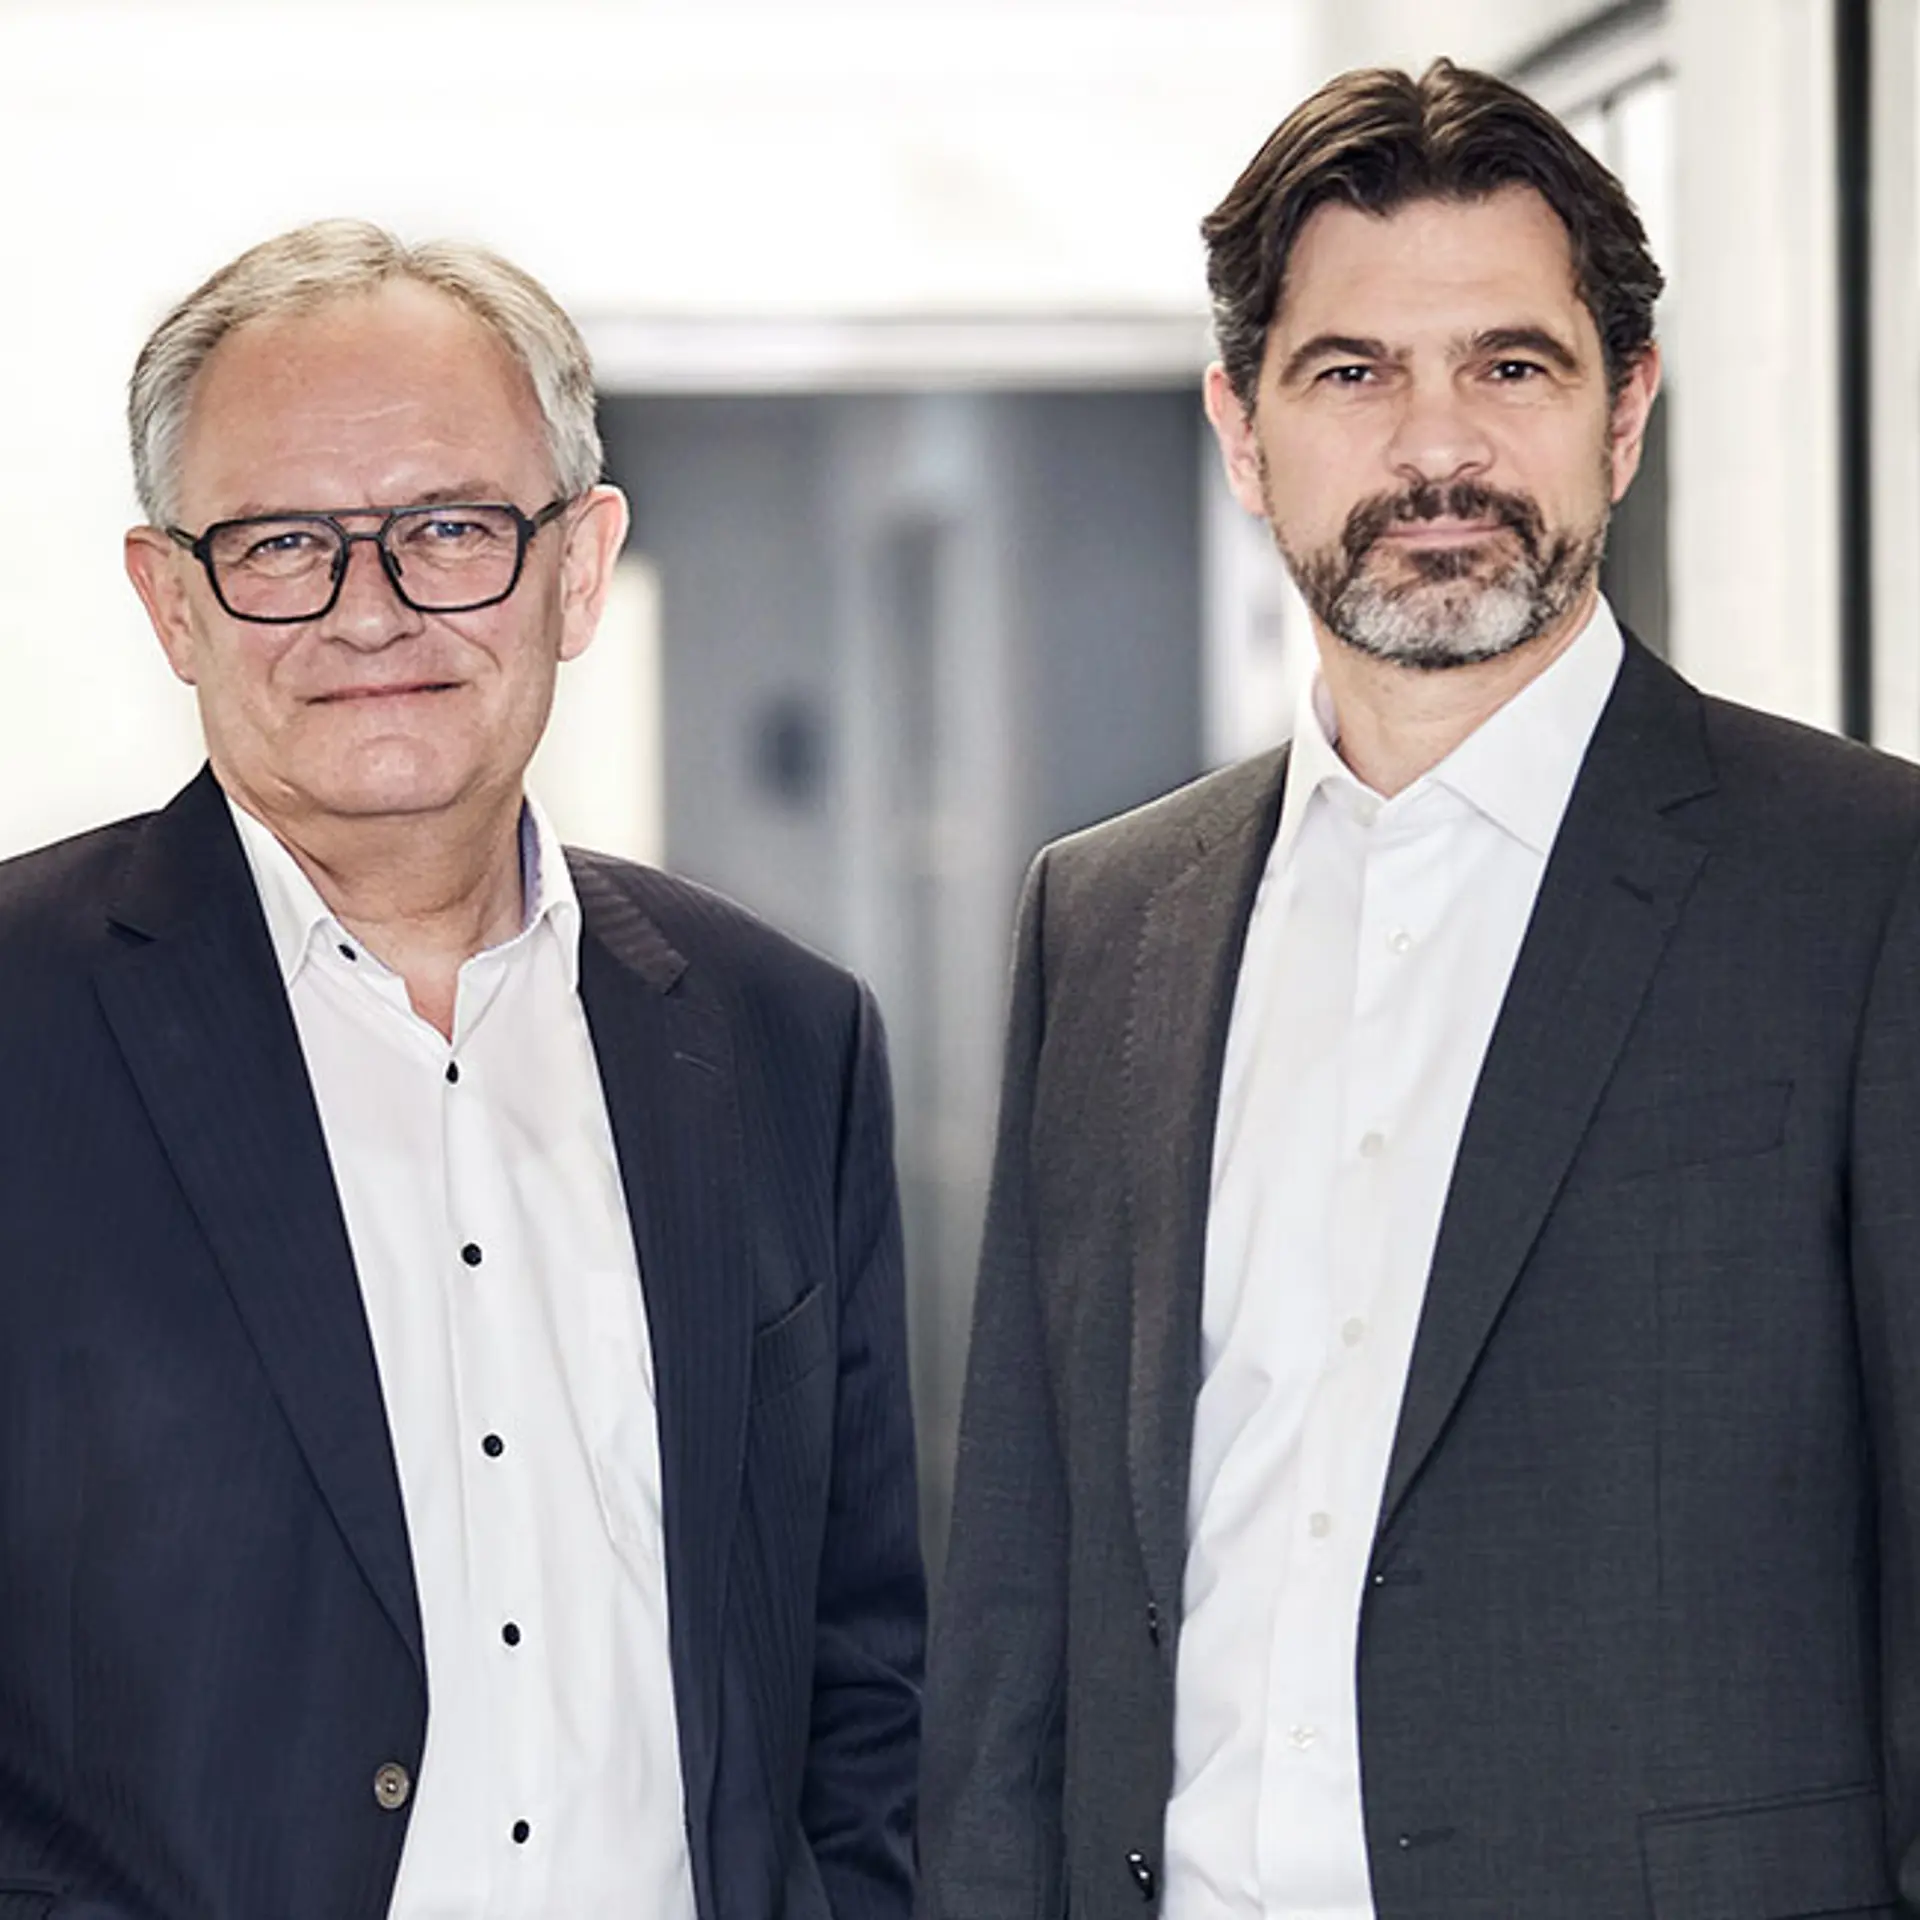 Adm bankdirektør Jan Ulsø Madsen og Vice bankdirektør Peter Hupfeld i Vestjysk Bank